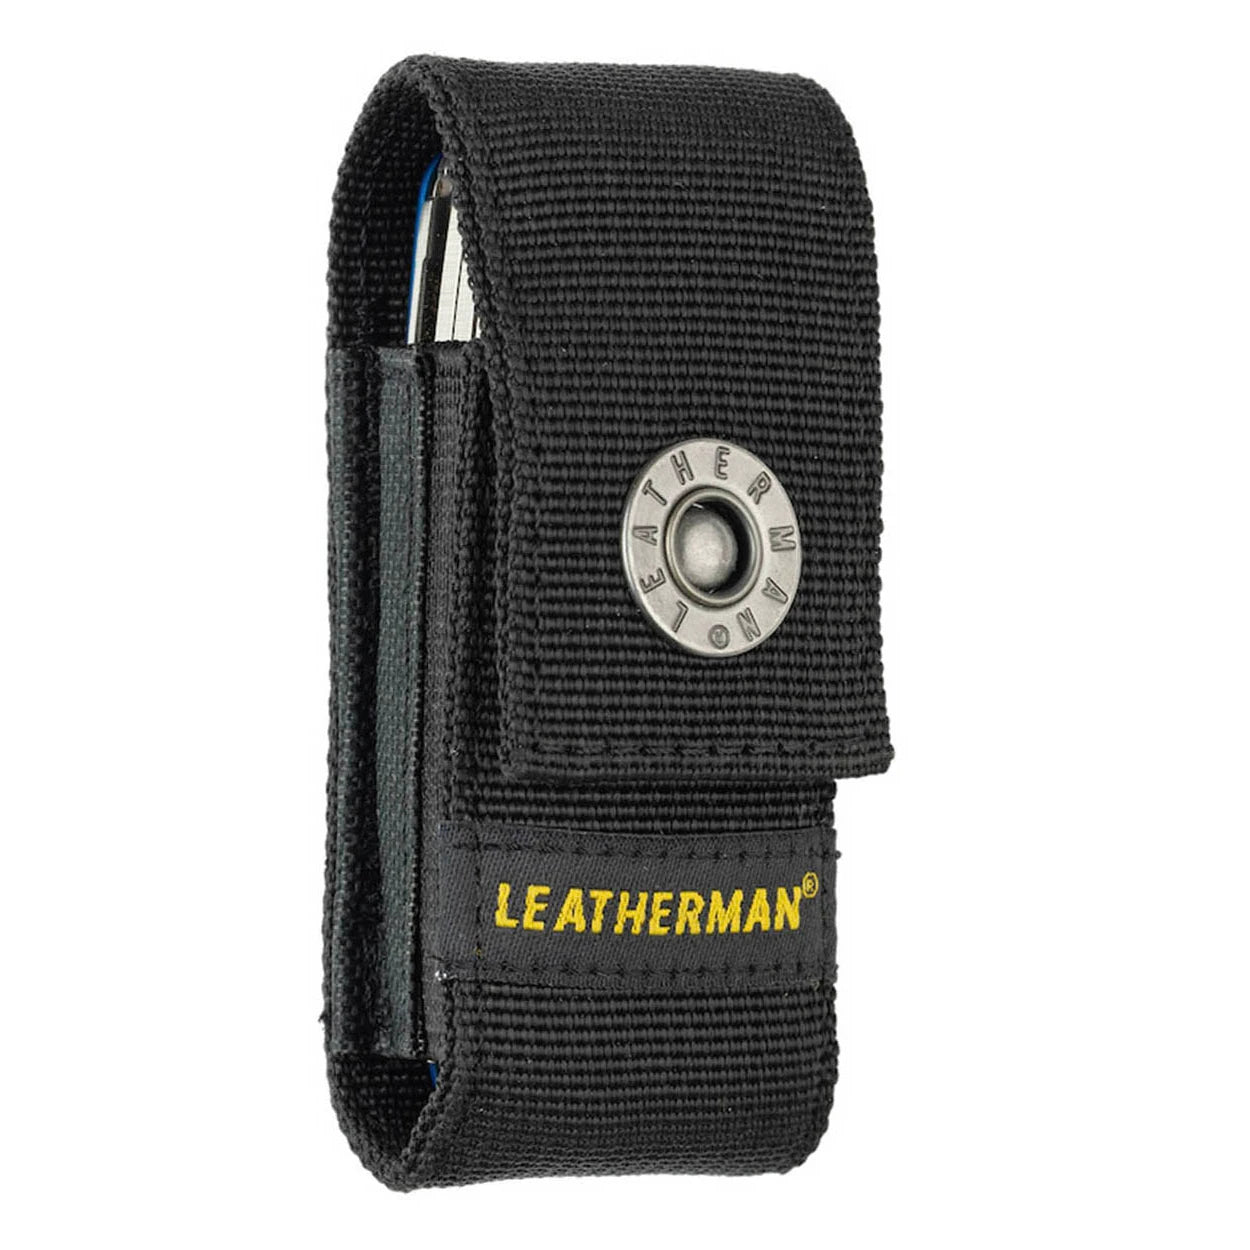 Leatherman - Signal Multi-Tool, Stainless Steel with Nylon Sheath